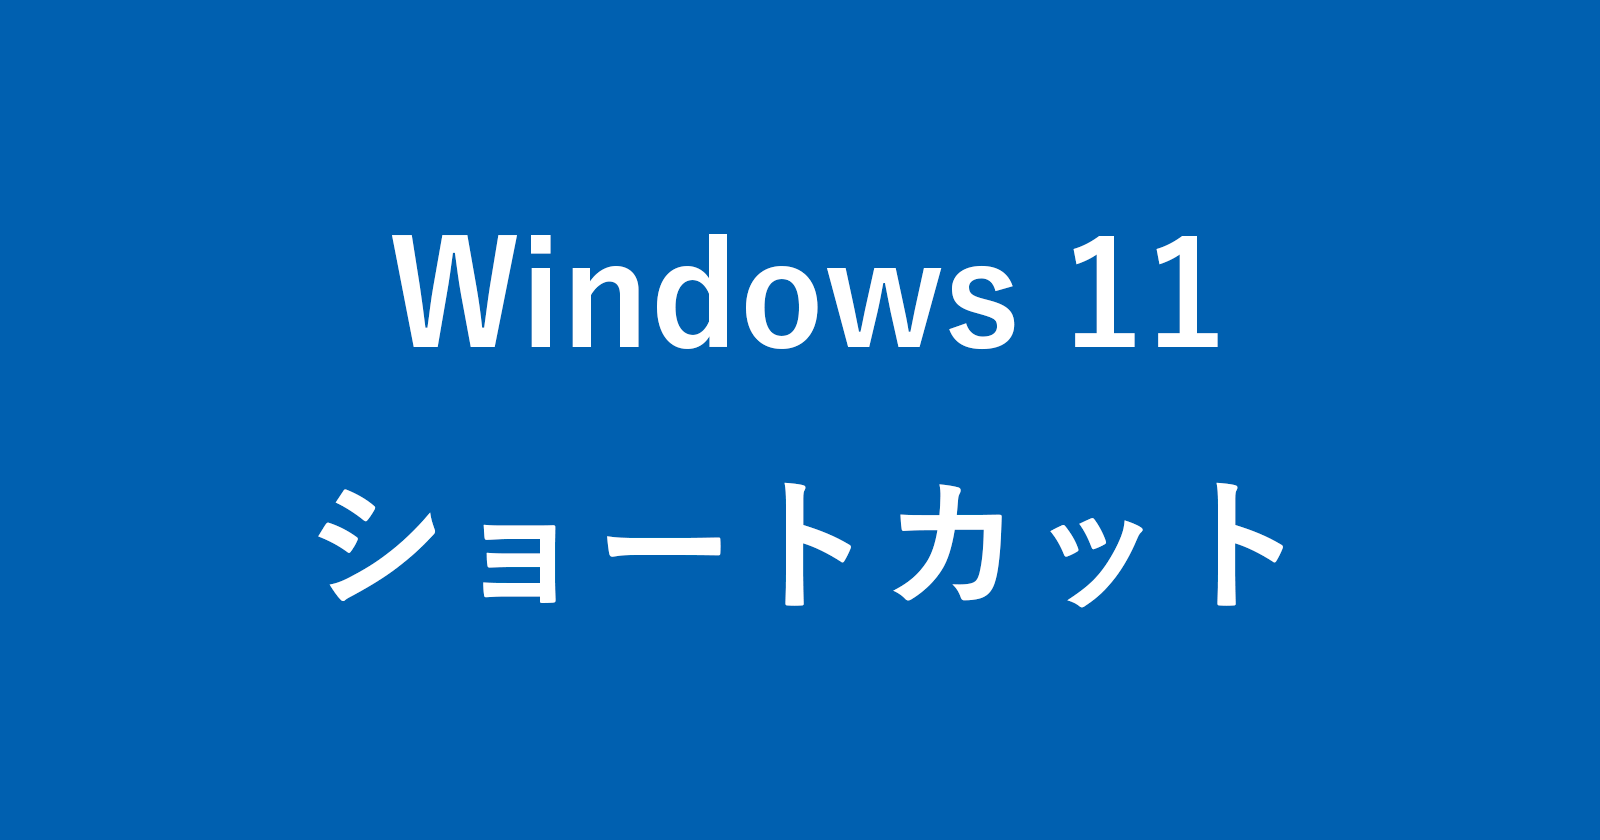 windows 11 app shortcut